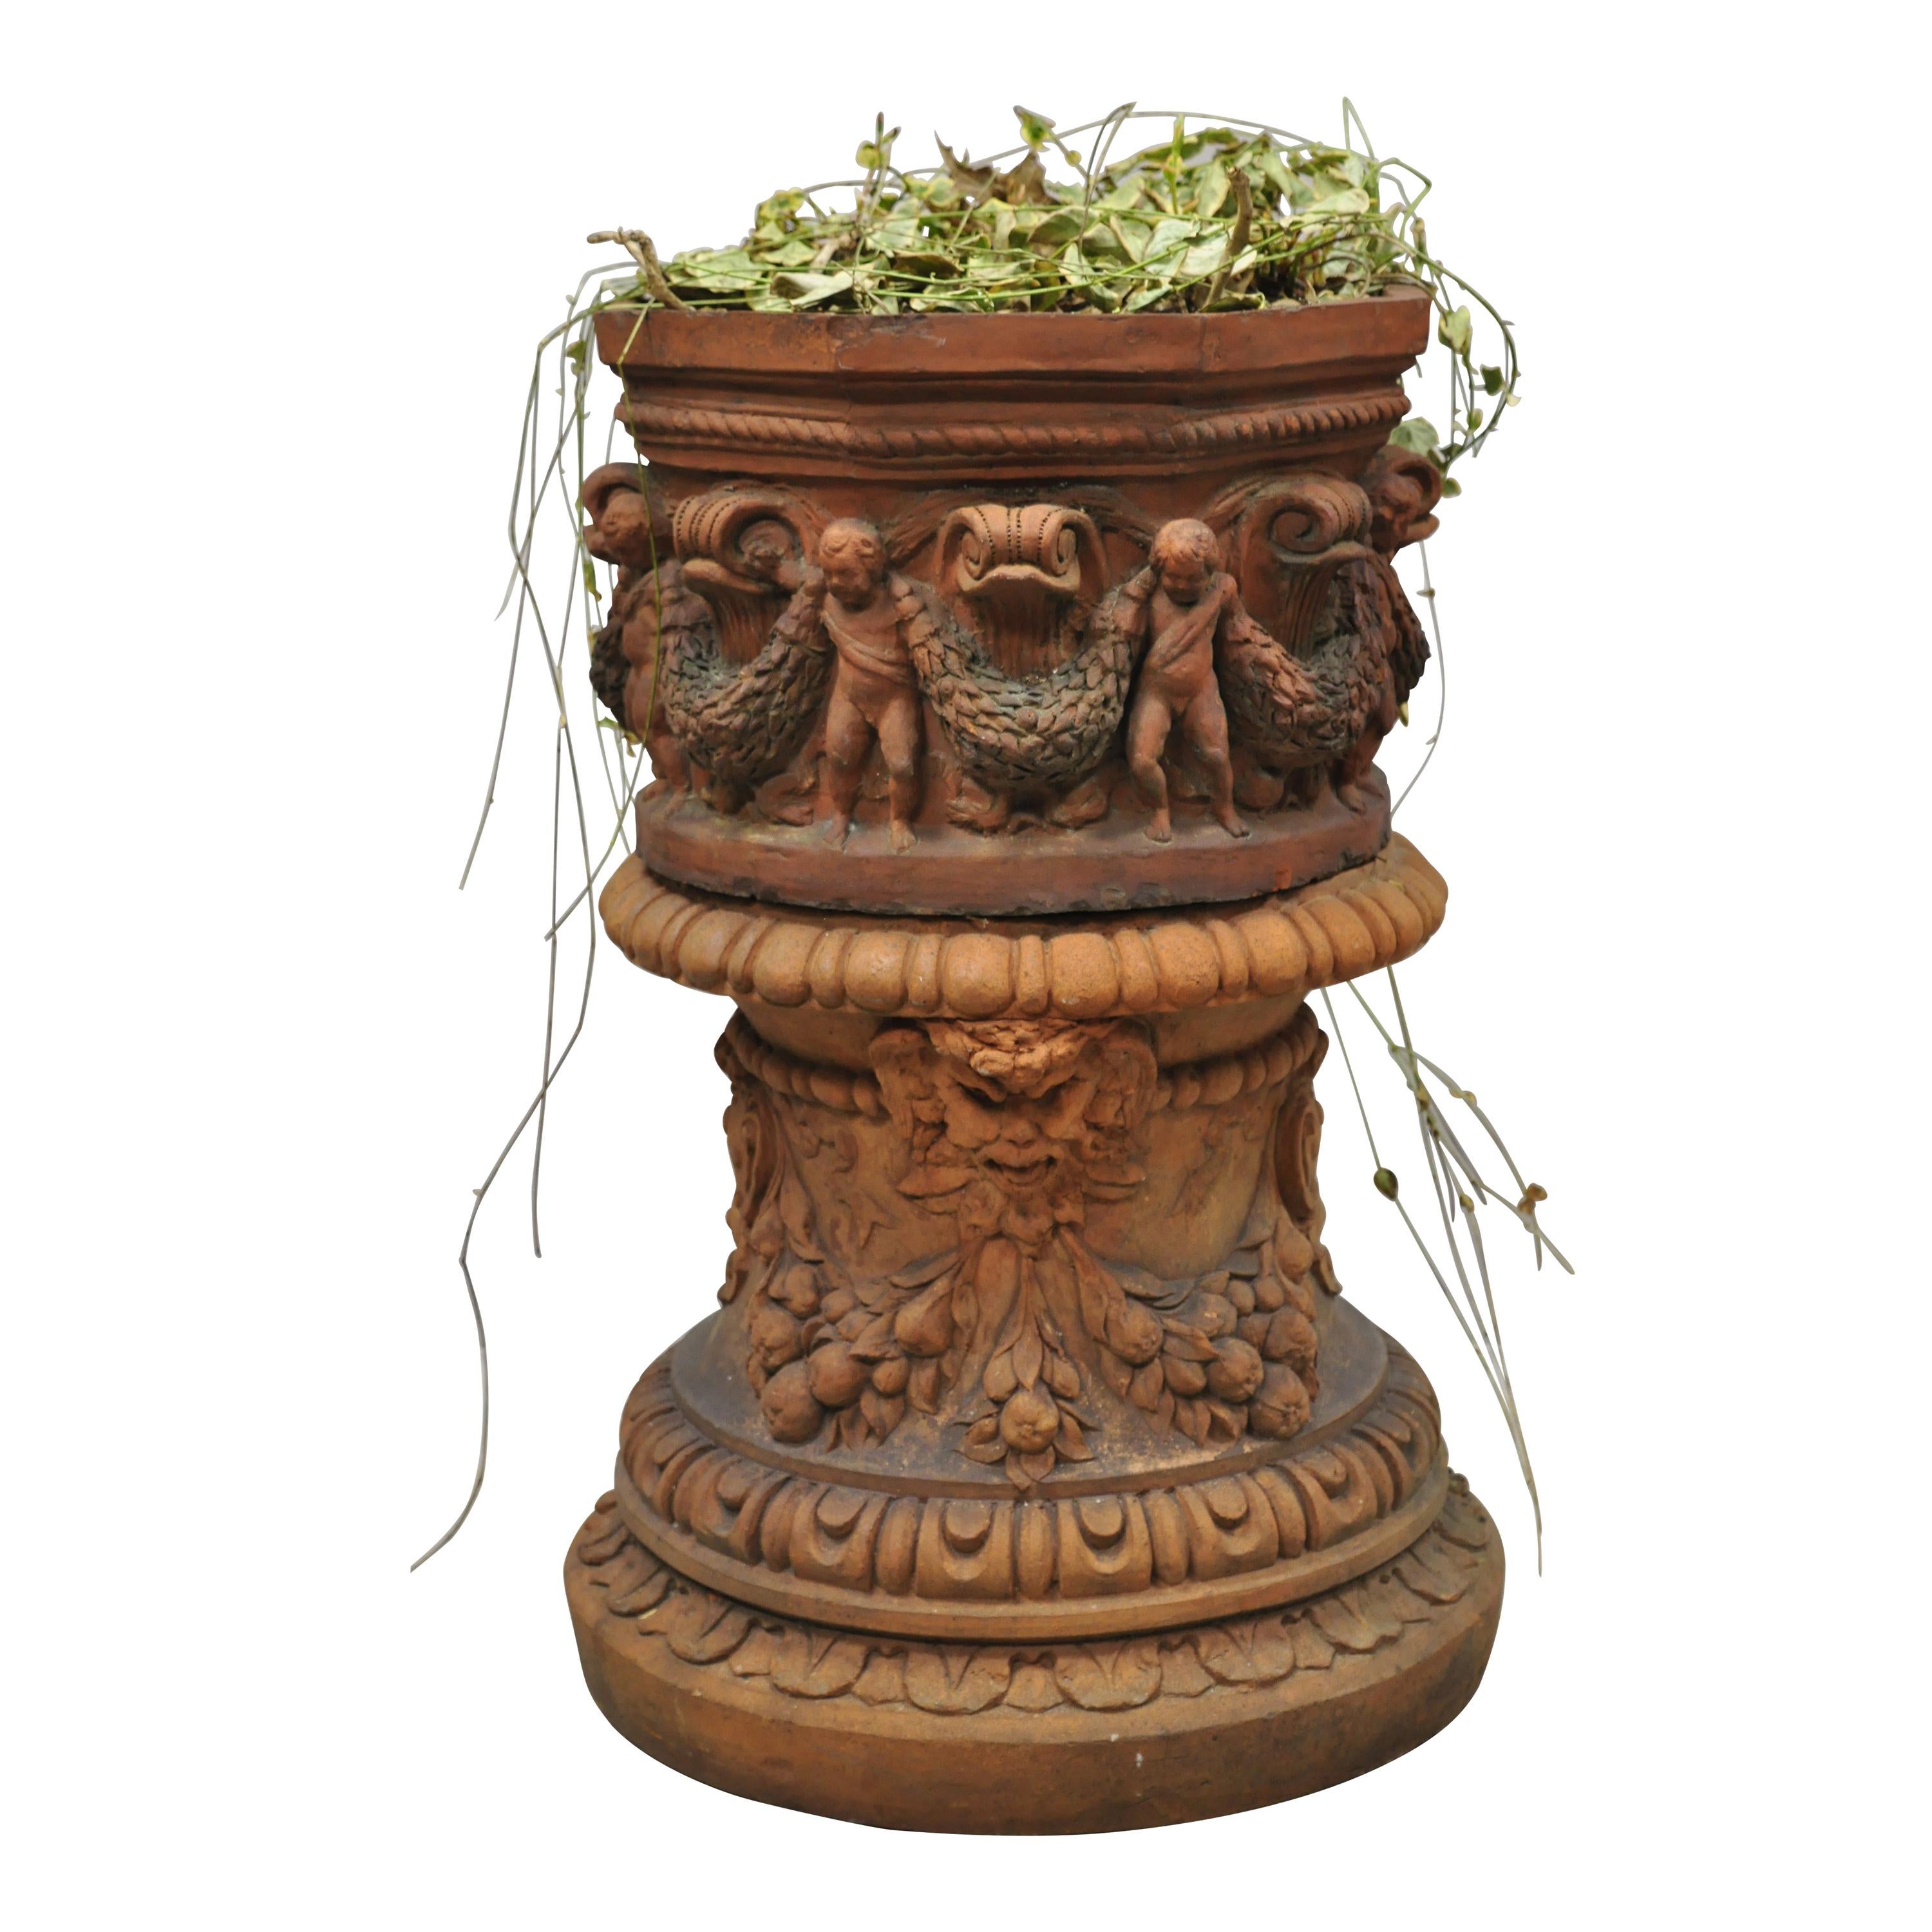 Antique Classical Terracotta Garden Pedestal Planter Pot with Cherub Figures